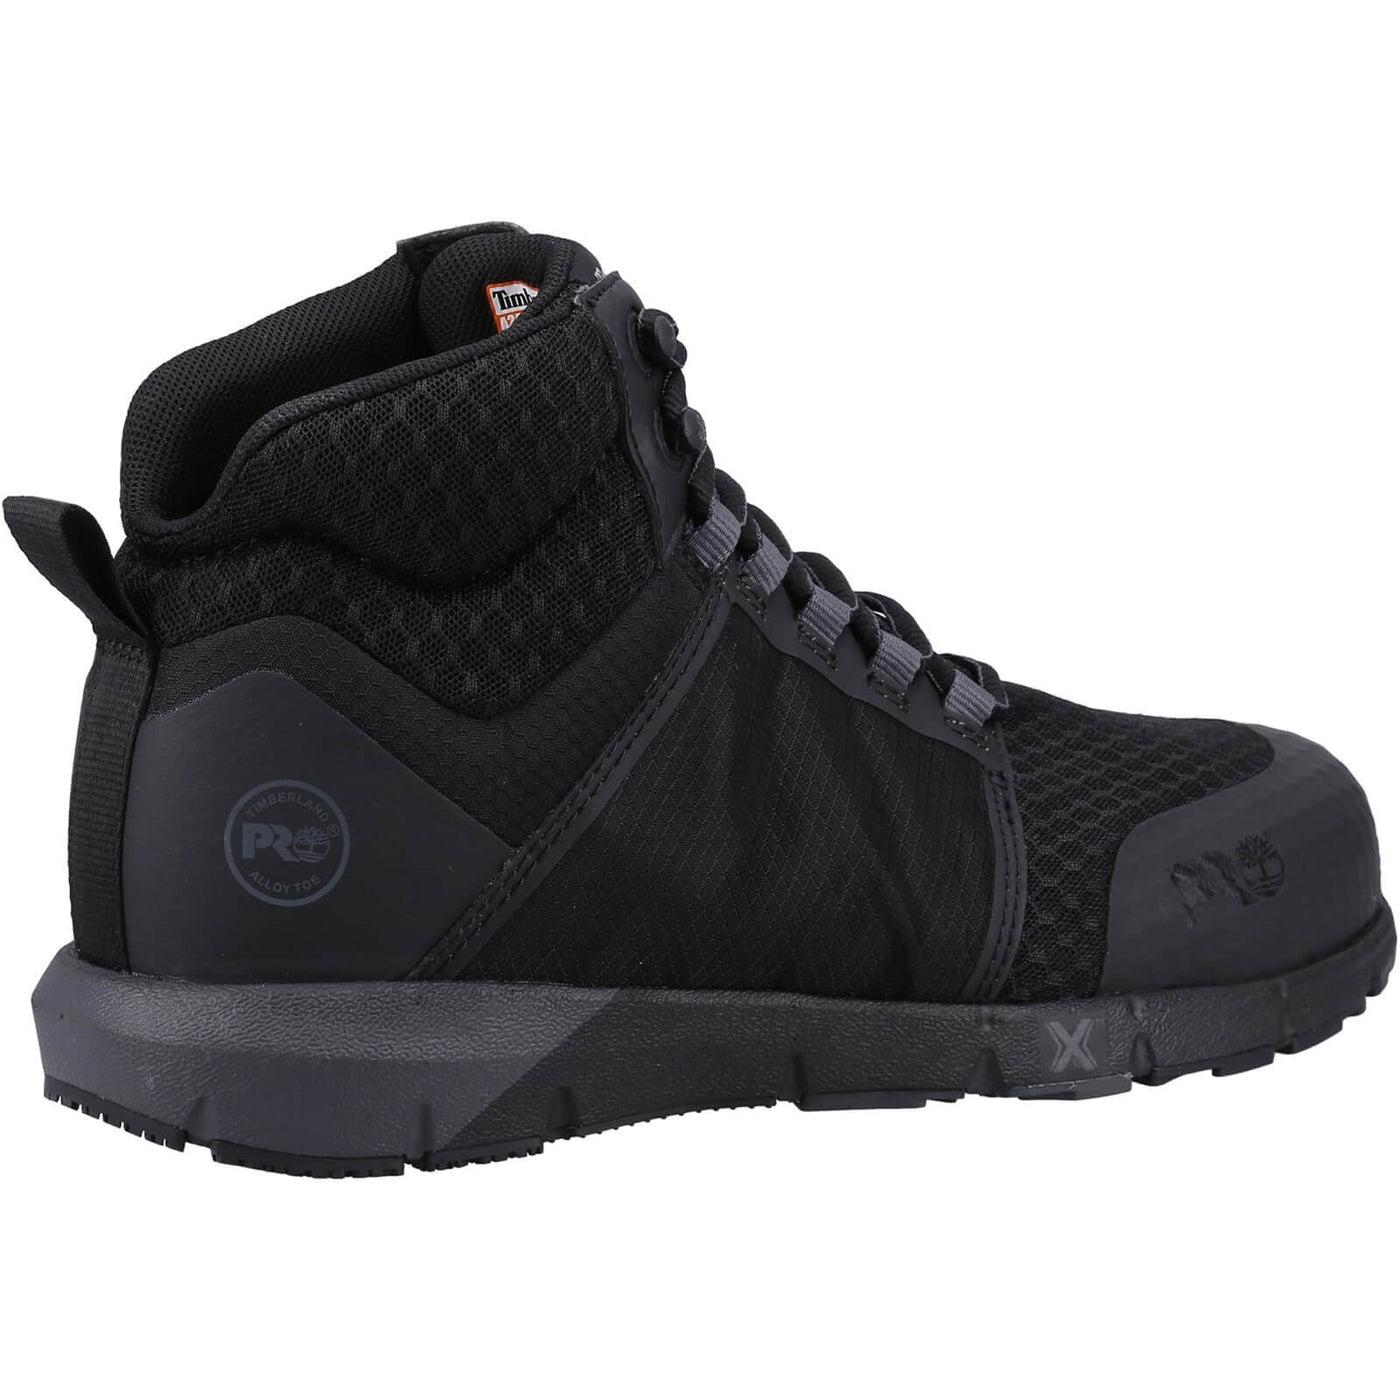 Timberland Pro Radius Safety Boots Black 2#colour_black